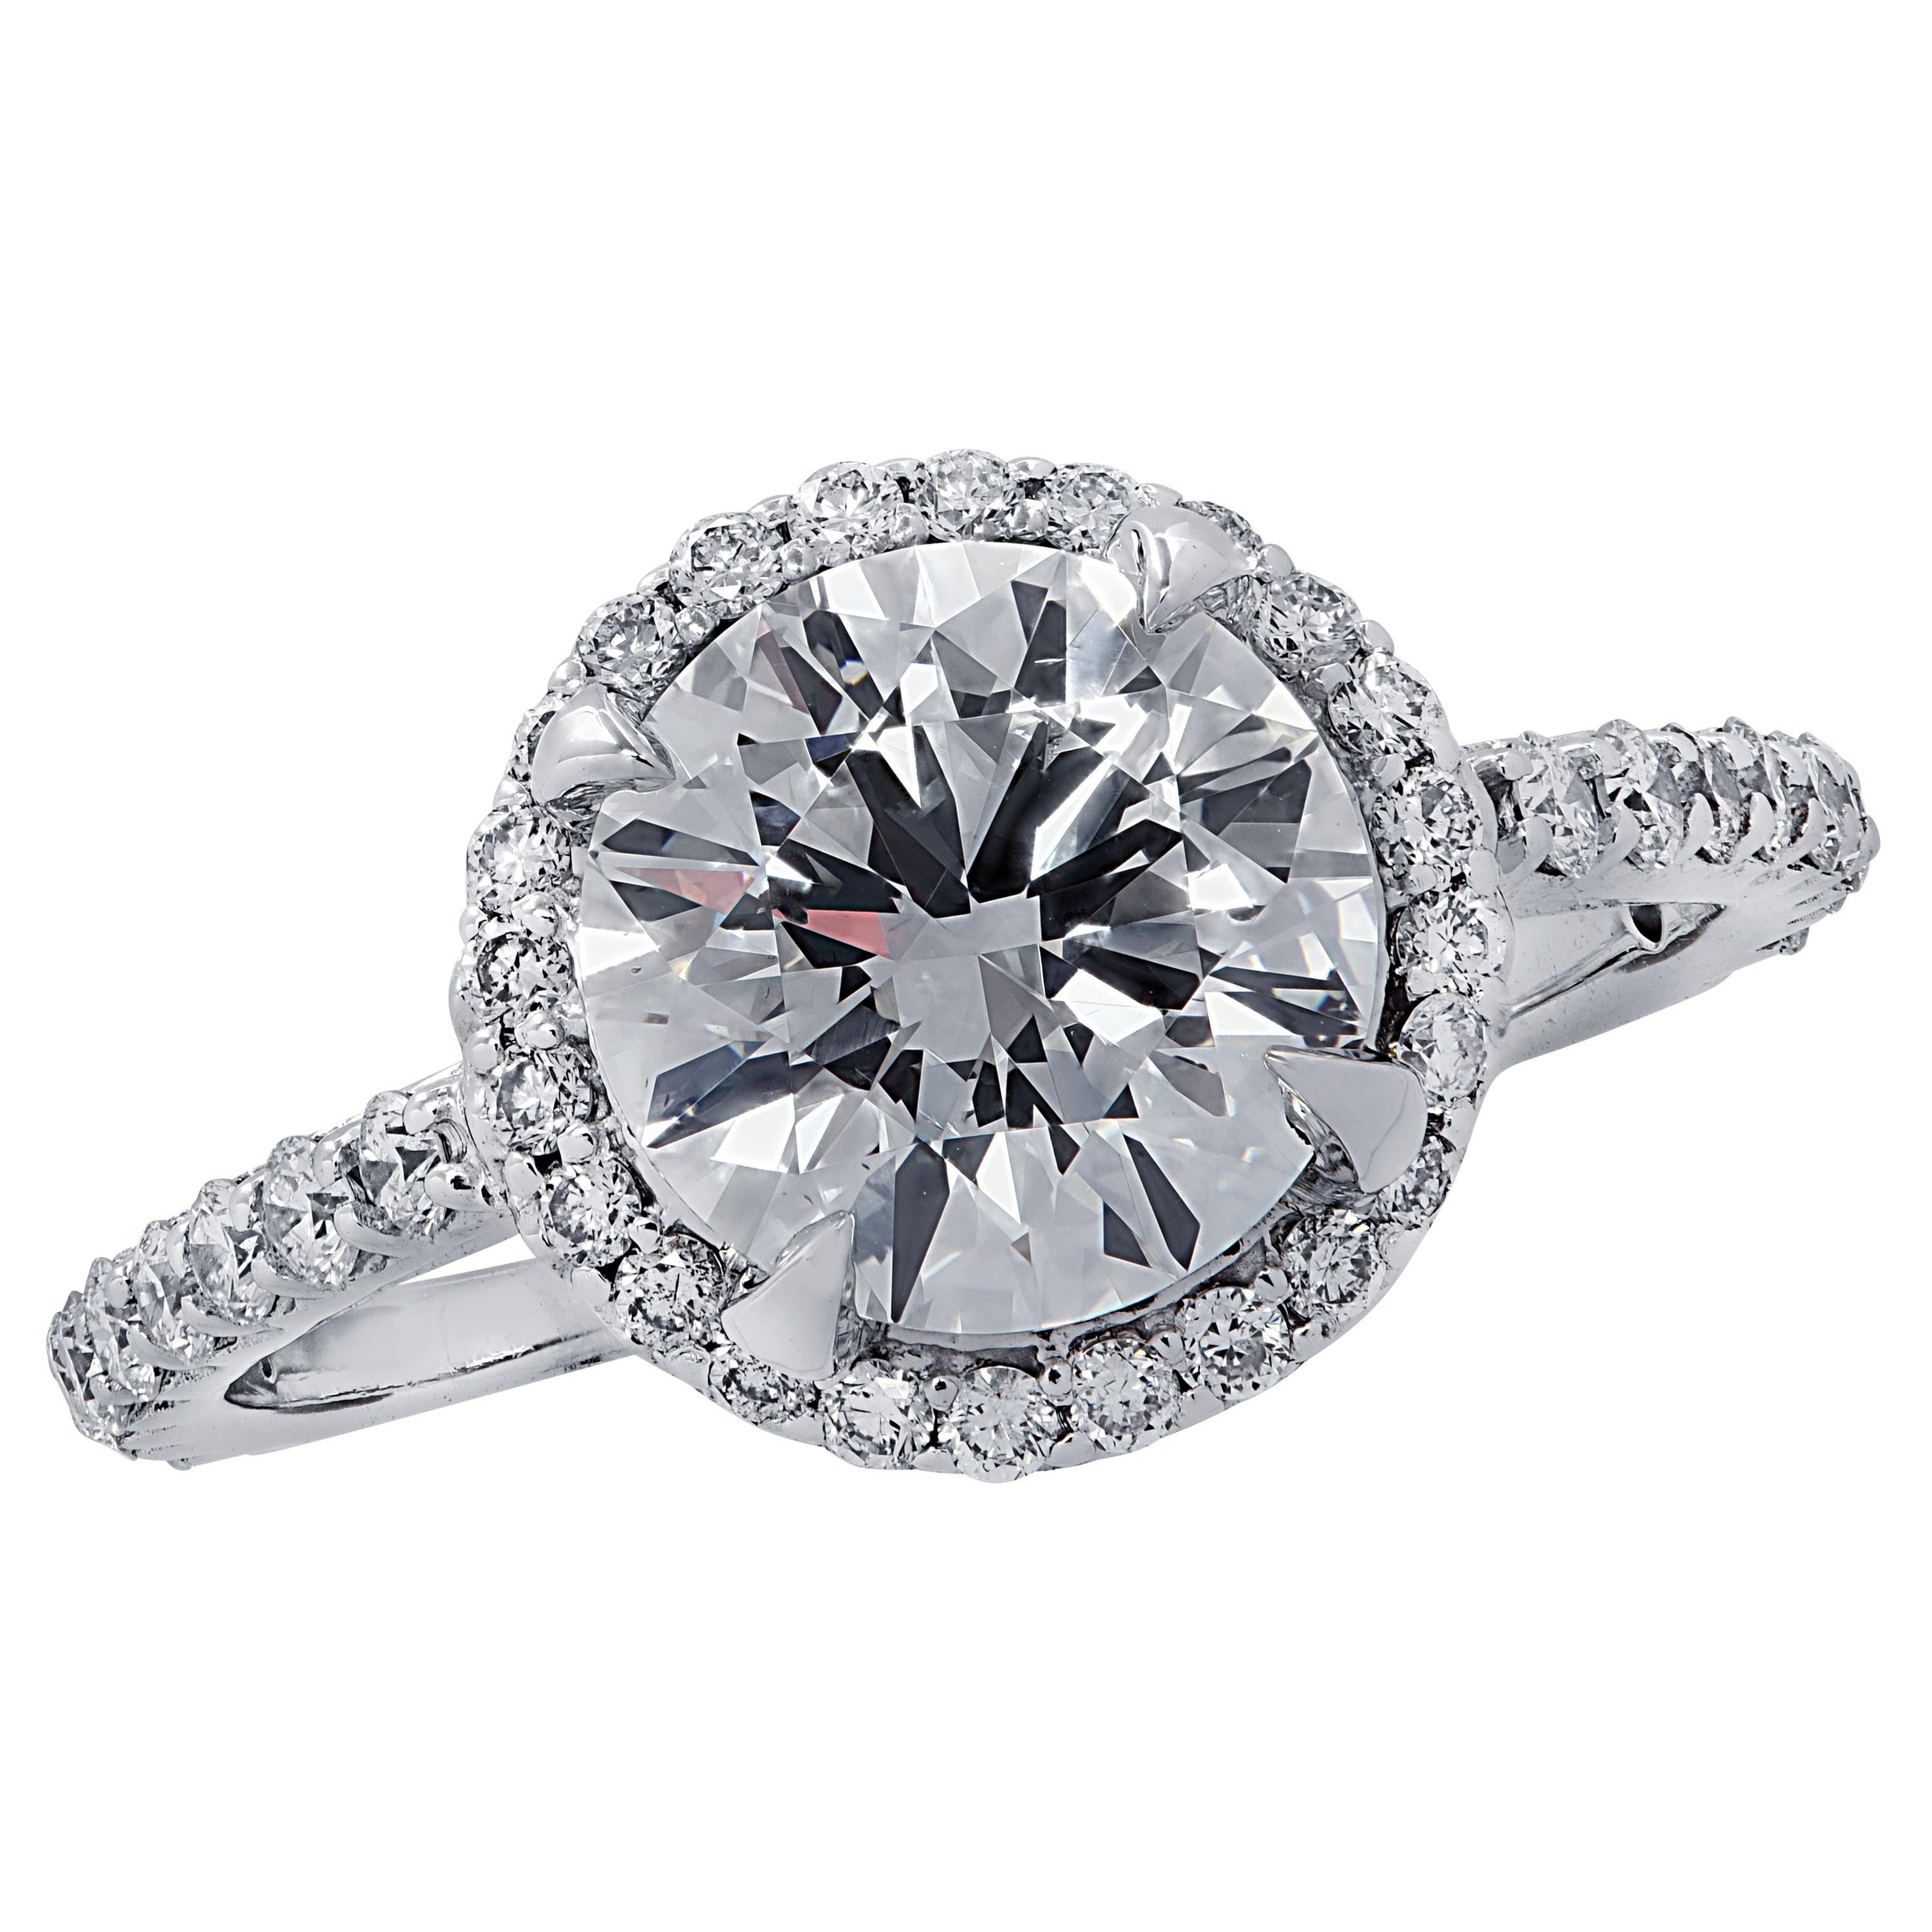 Vivid Diamonds GIA Certified 1.74 Carat Diamond Engagement Halo Ring